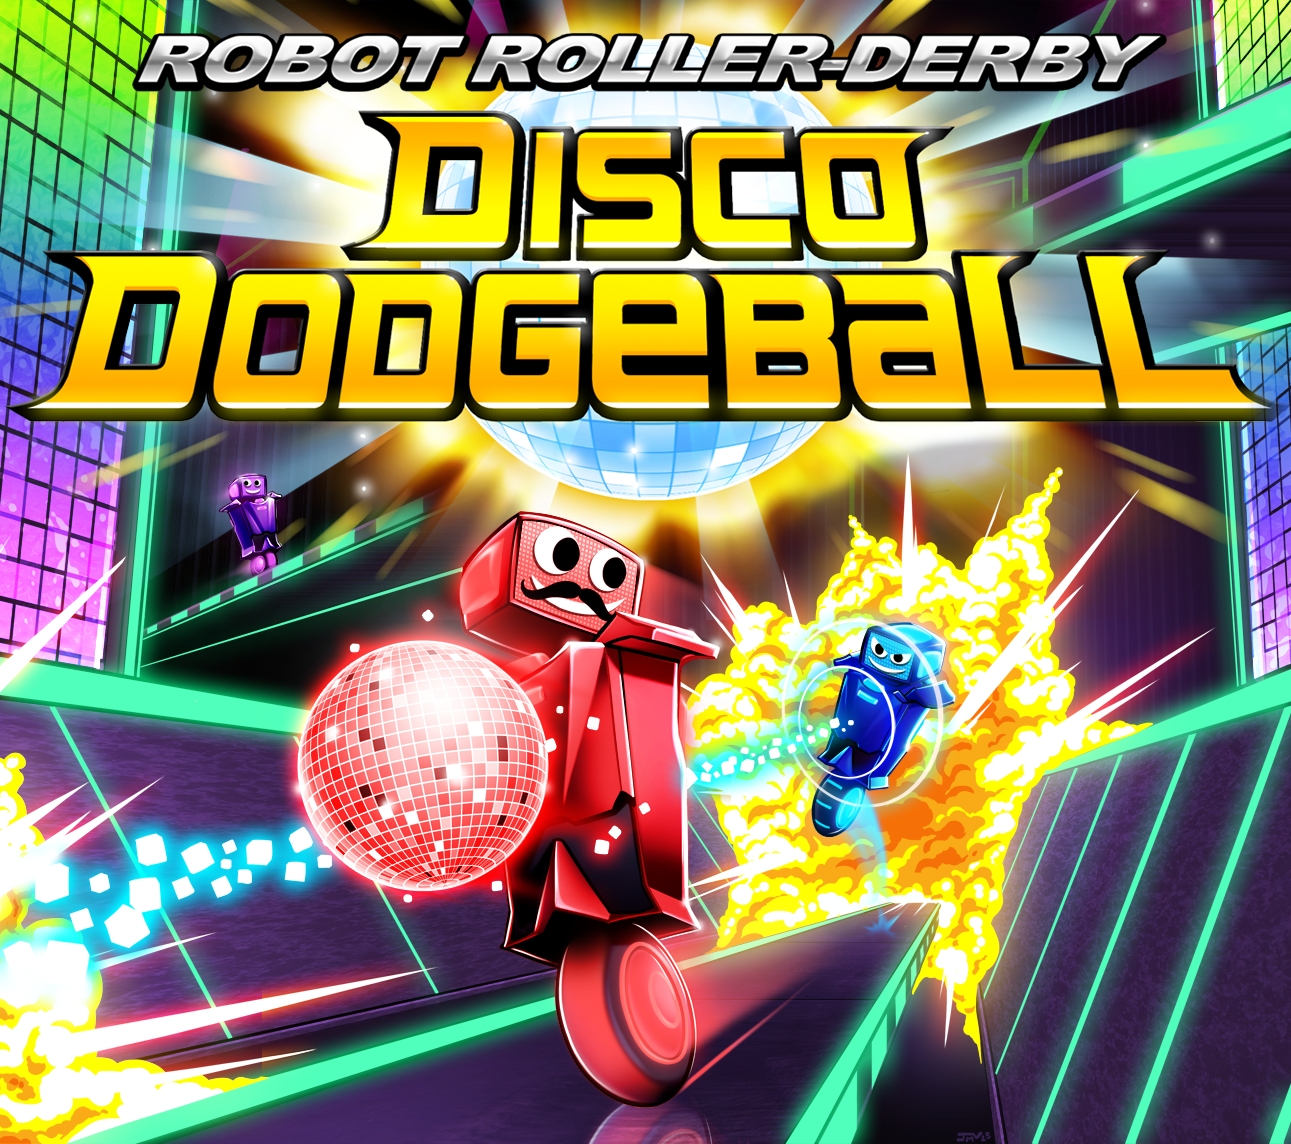 Robot Roller-Derby Disco Dodgeball Picture